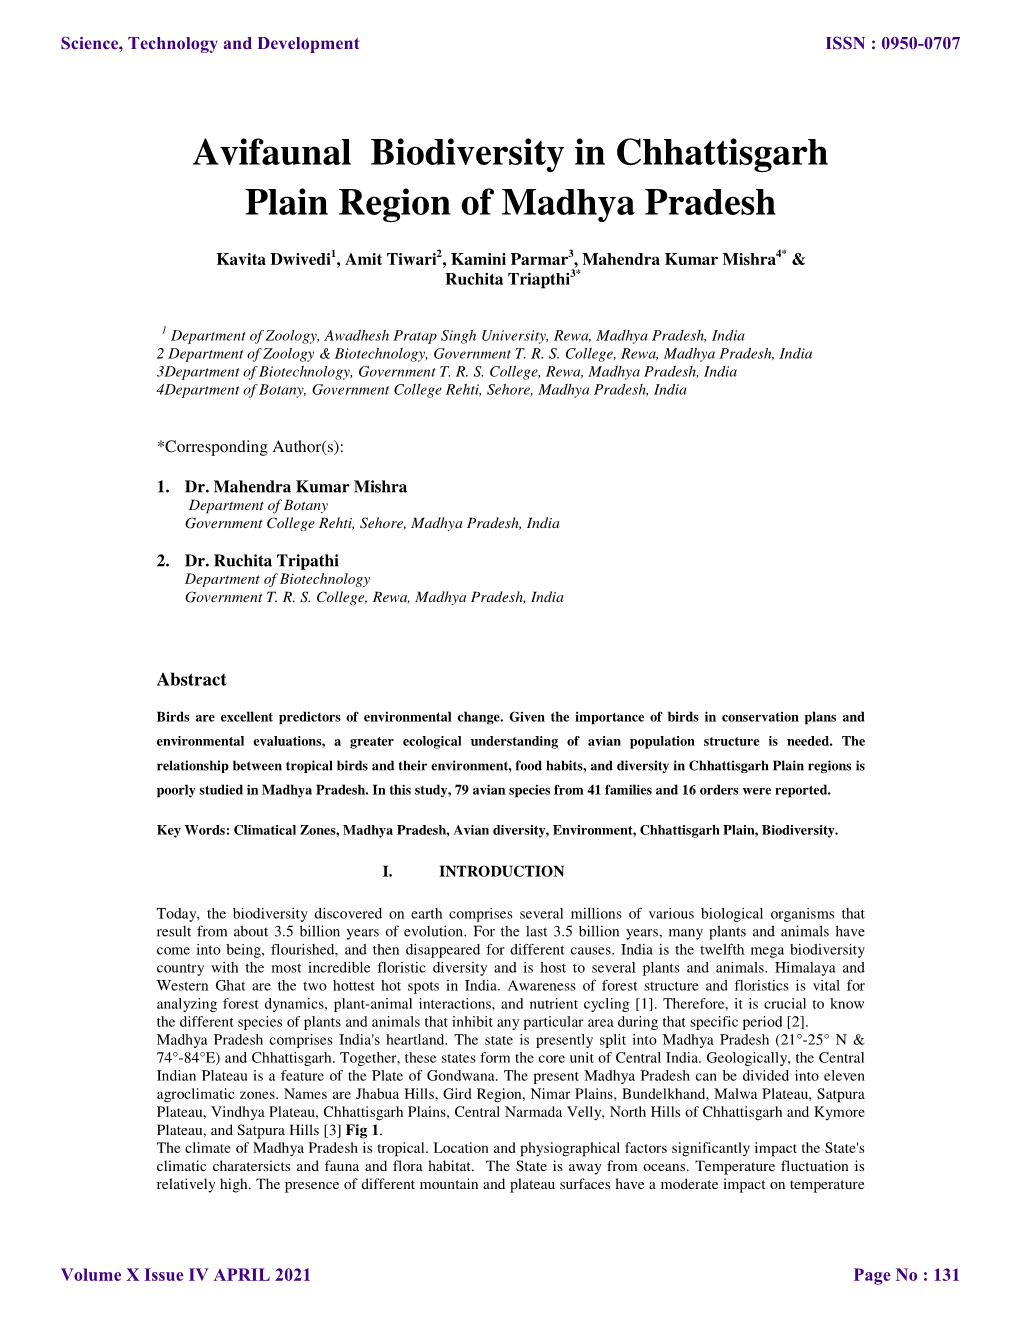 Avifaunal Biodiversity in Chhattisgarh Plain Region of Madhya Pradesh